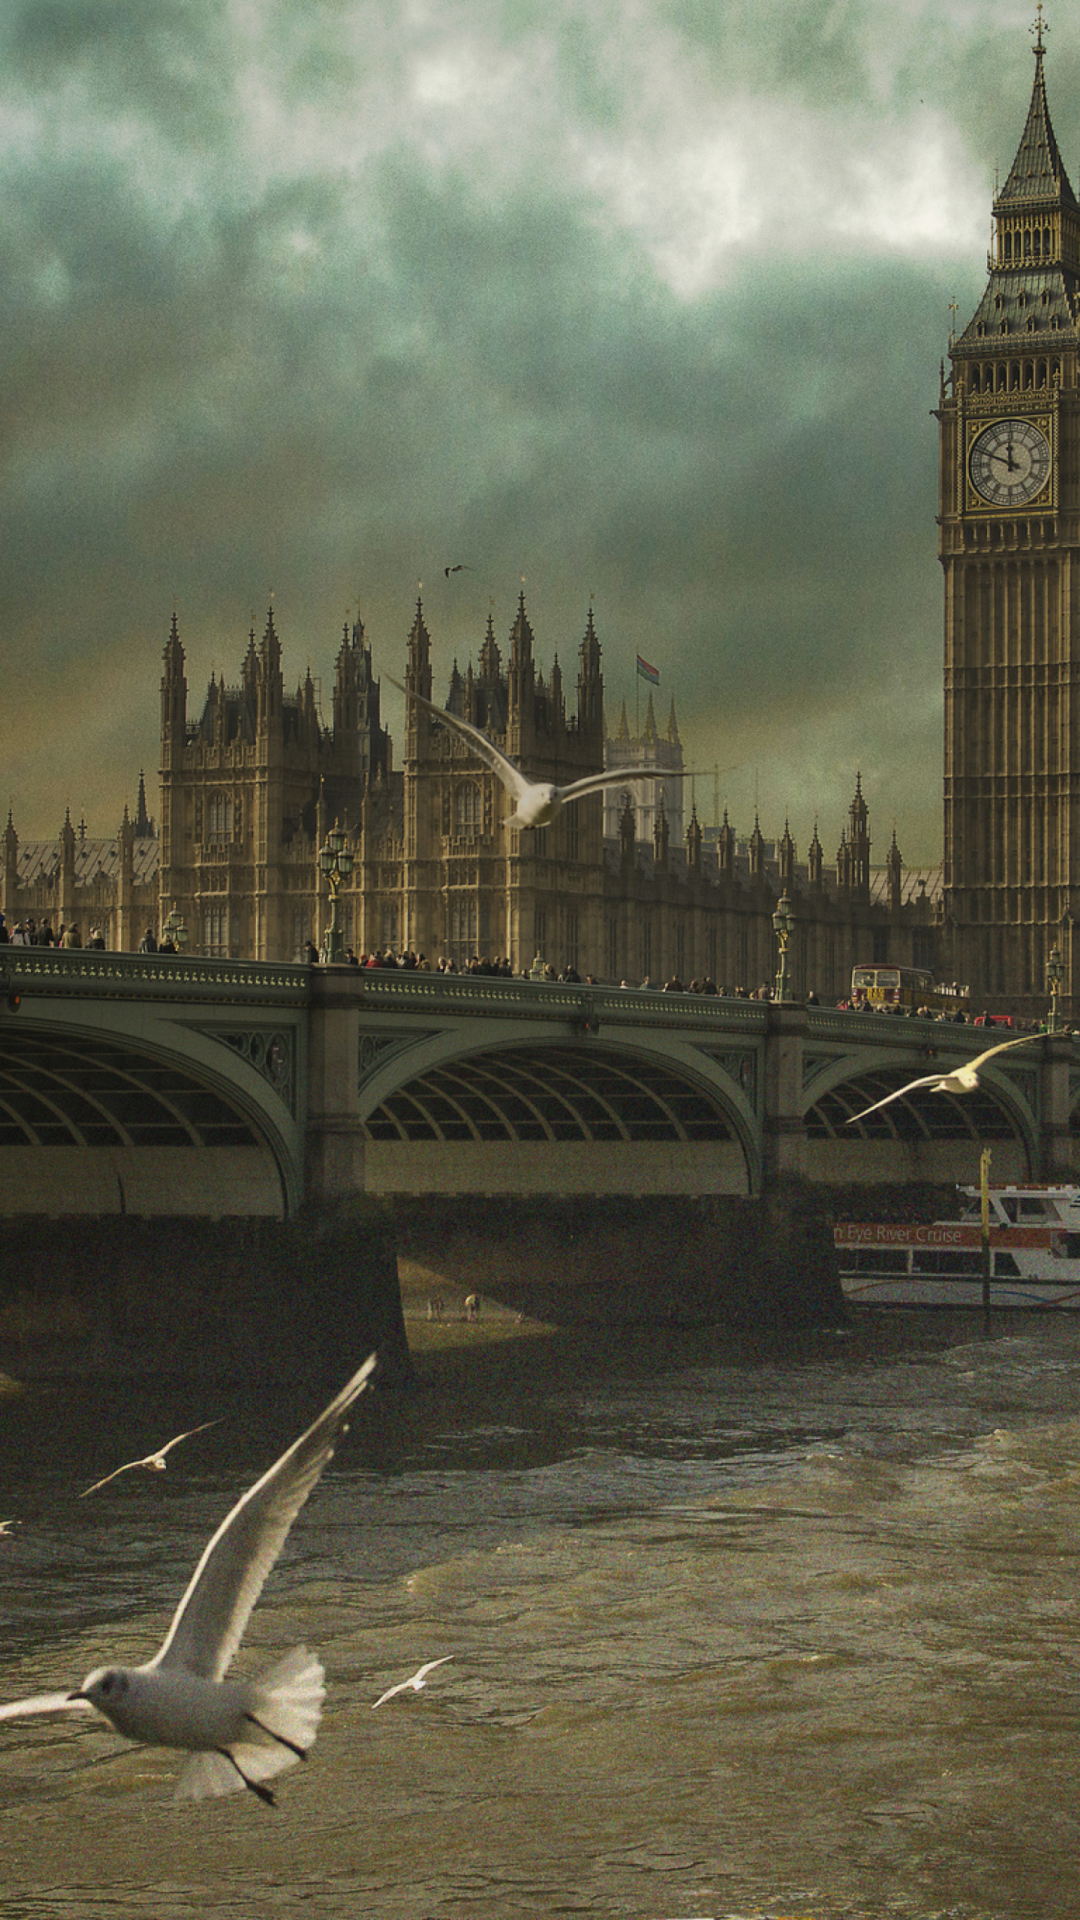 Das Dramatic Big Ben And Seagulls In London England Wallpaper 1080x1920